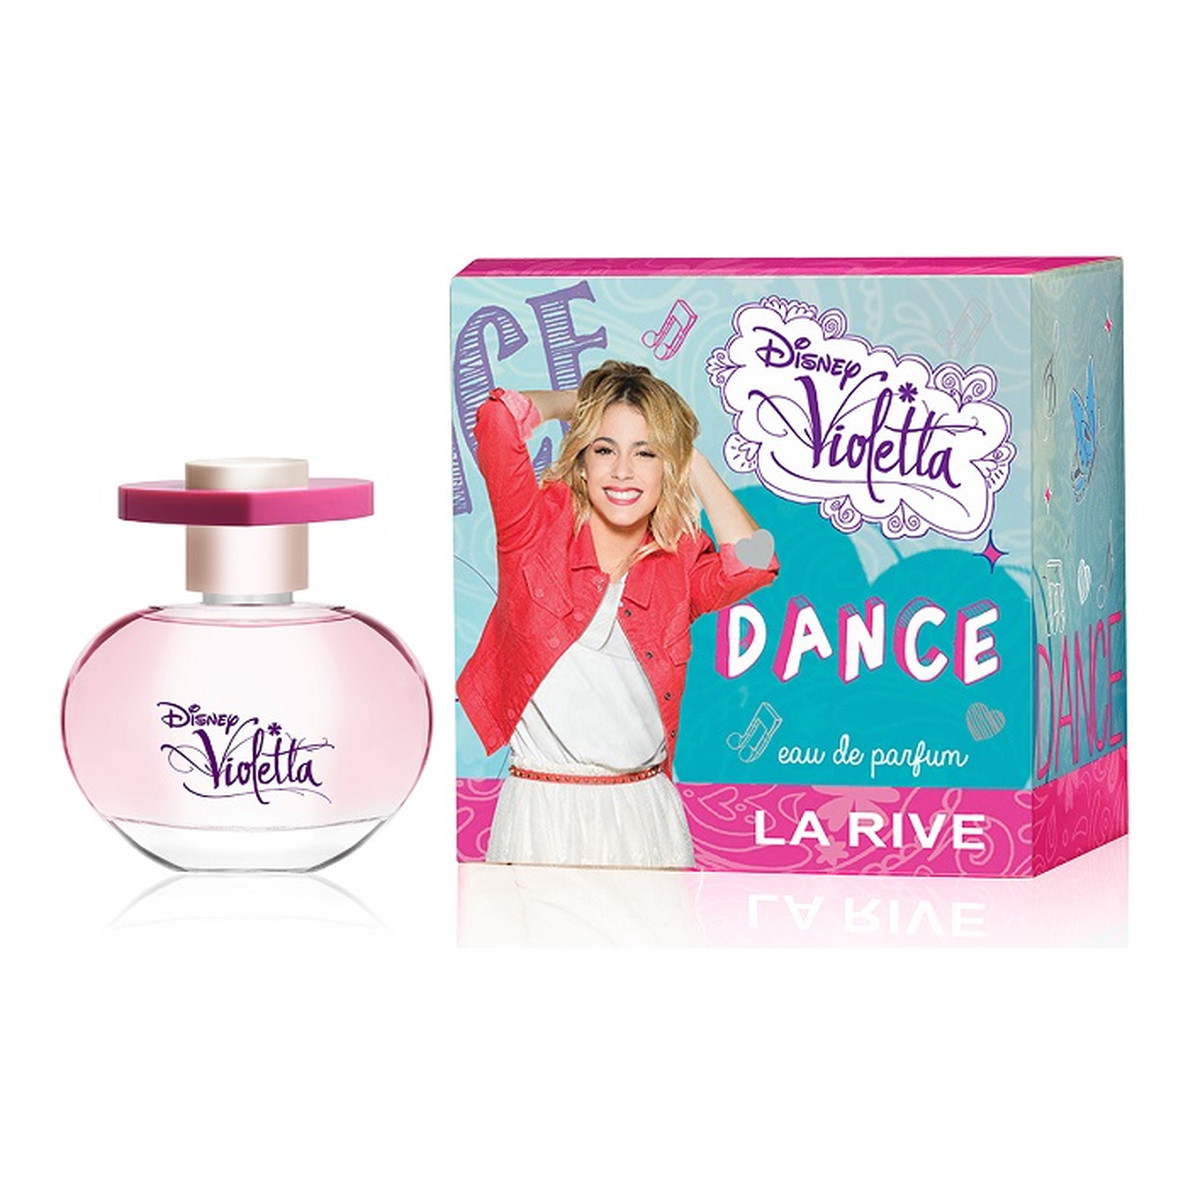 La Rive Disney Violetta Dance Woda perfumowana 50ml